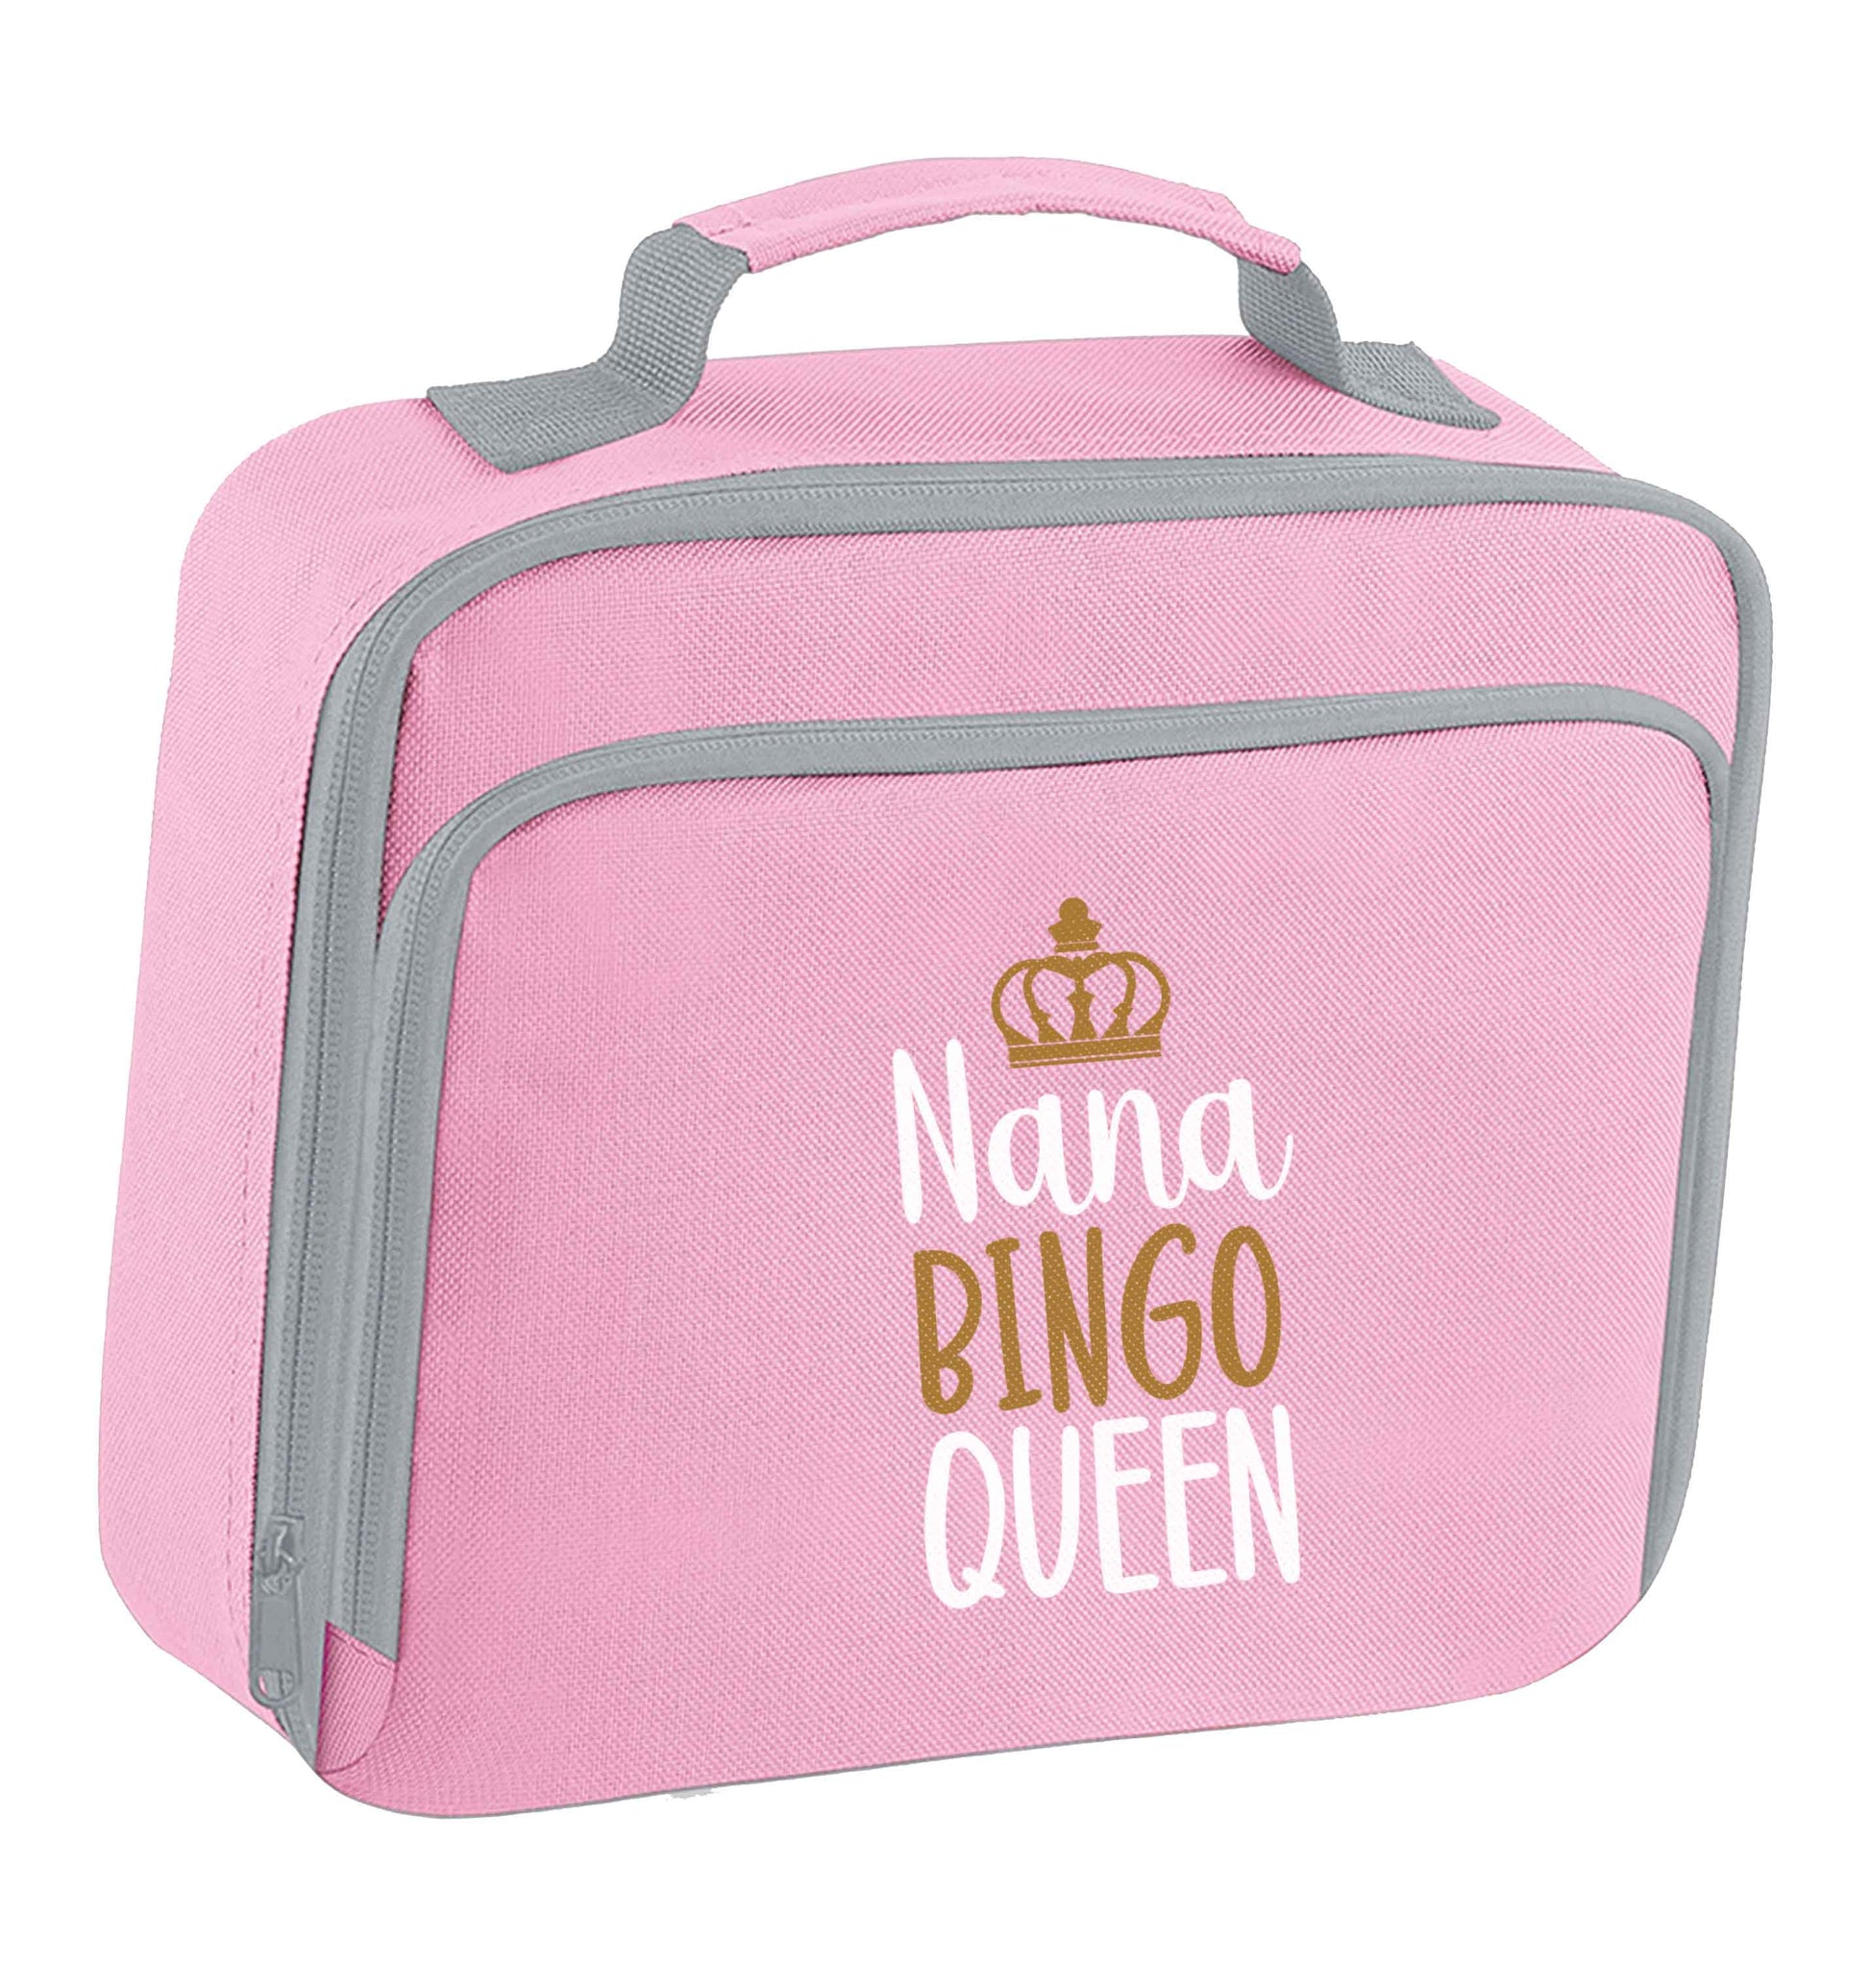 Personalised bingo queen insulated pink lunch bag cooler